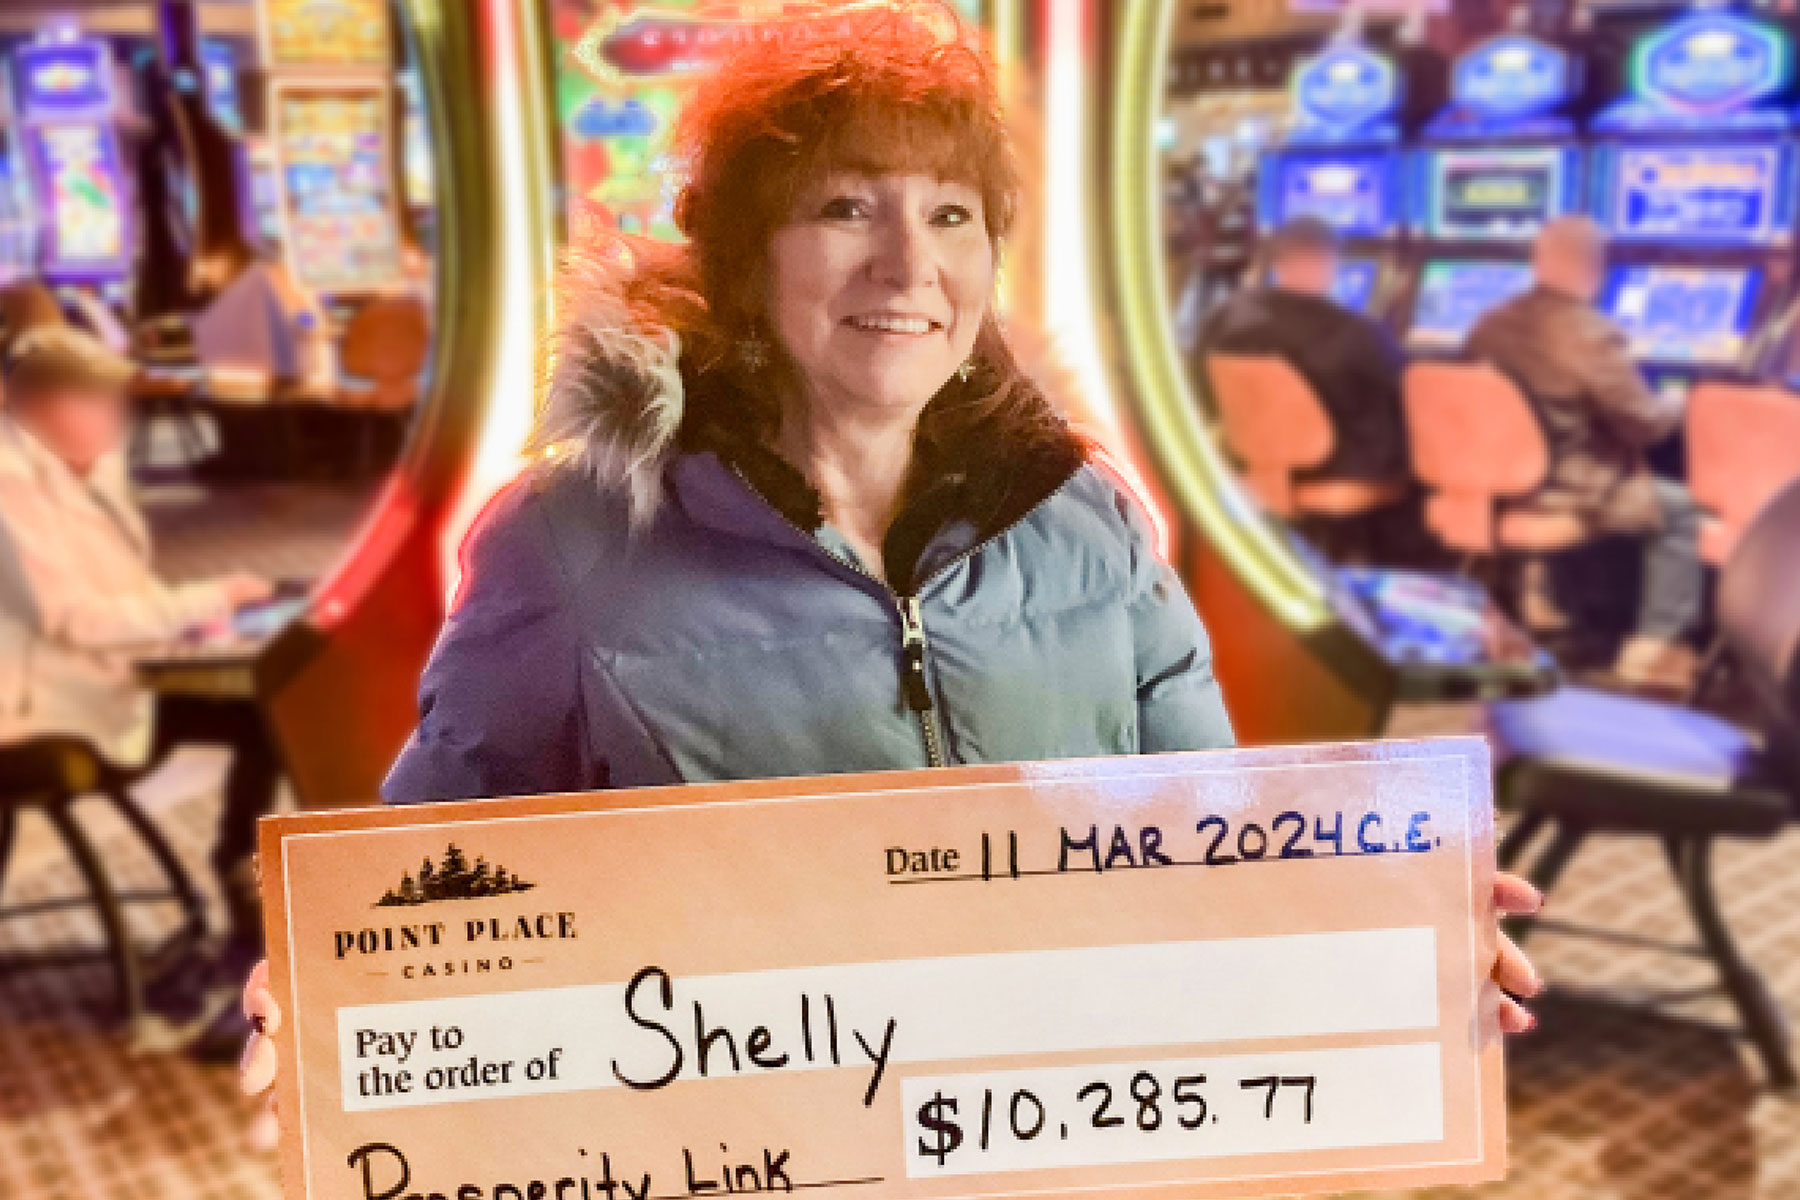 Shelly won $10,285